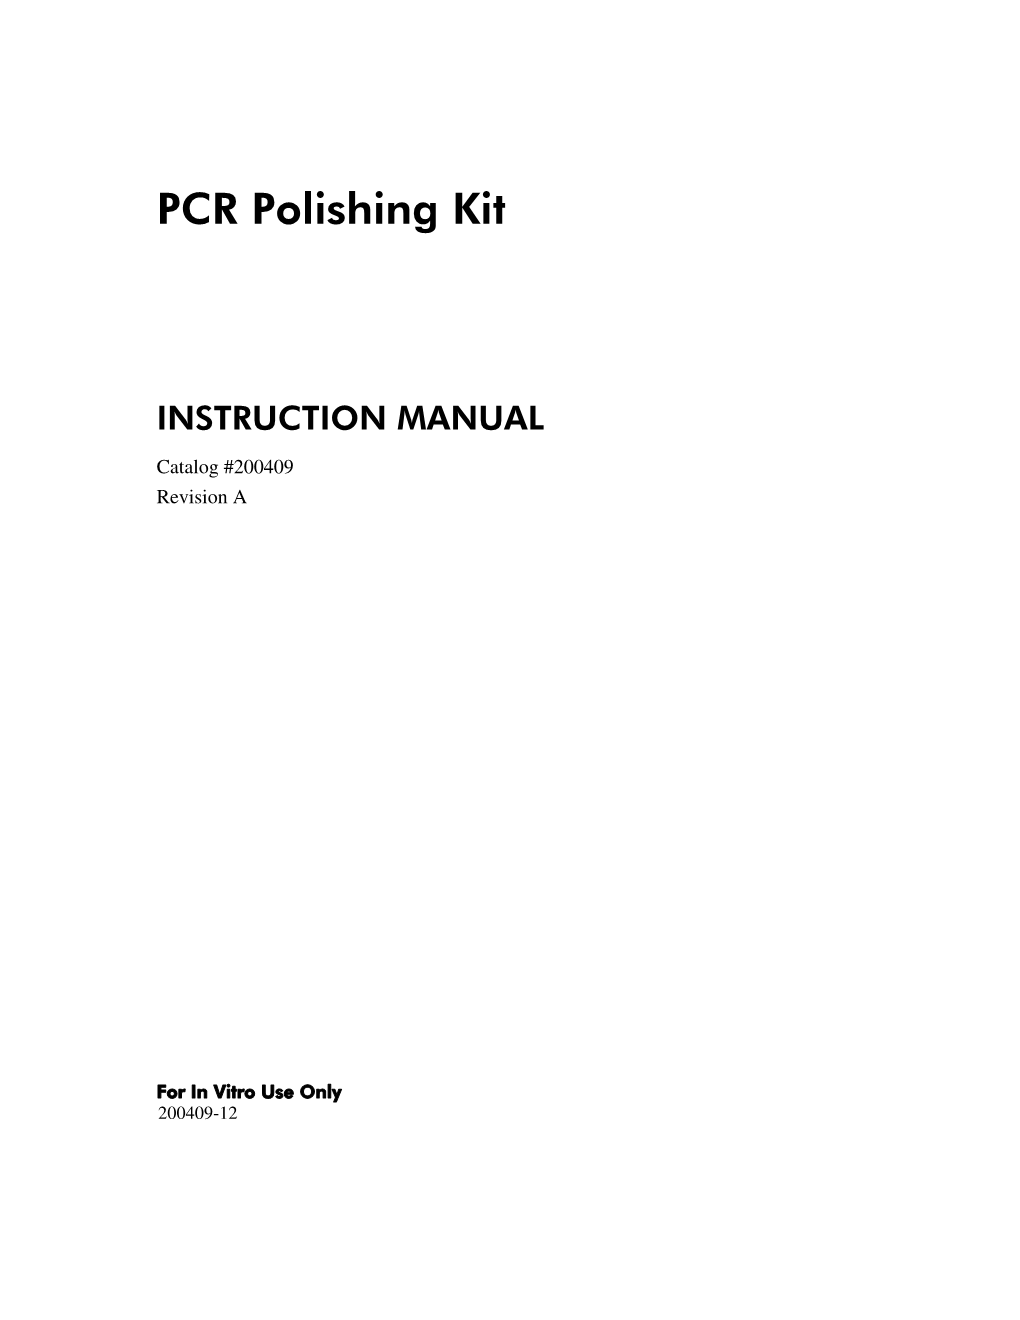 Manual: PCR Polishing